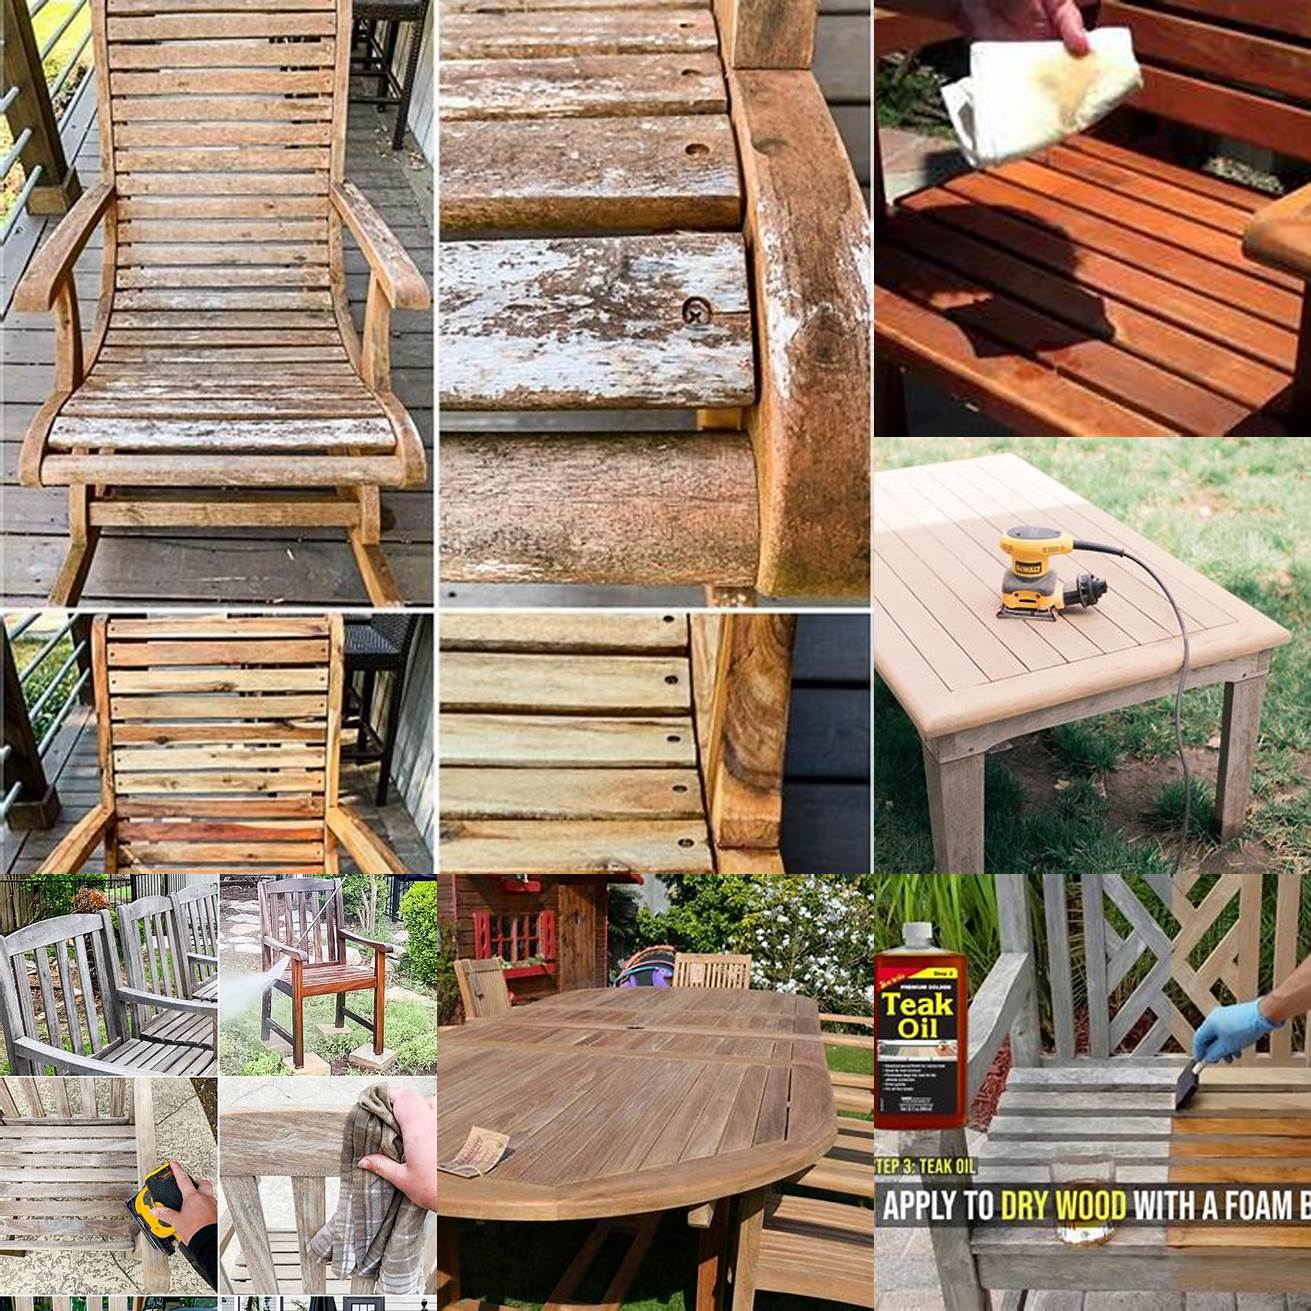 Treating teak wood furniture